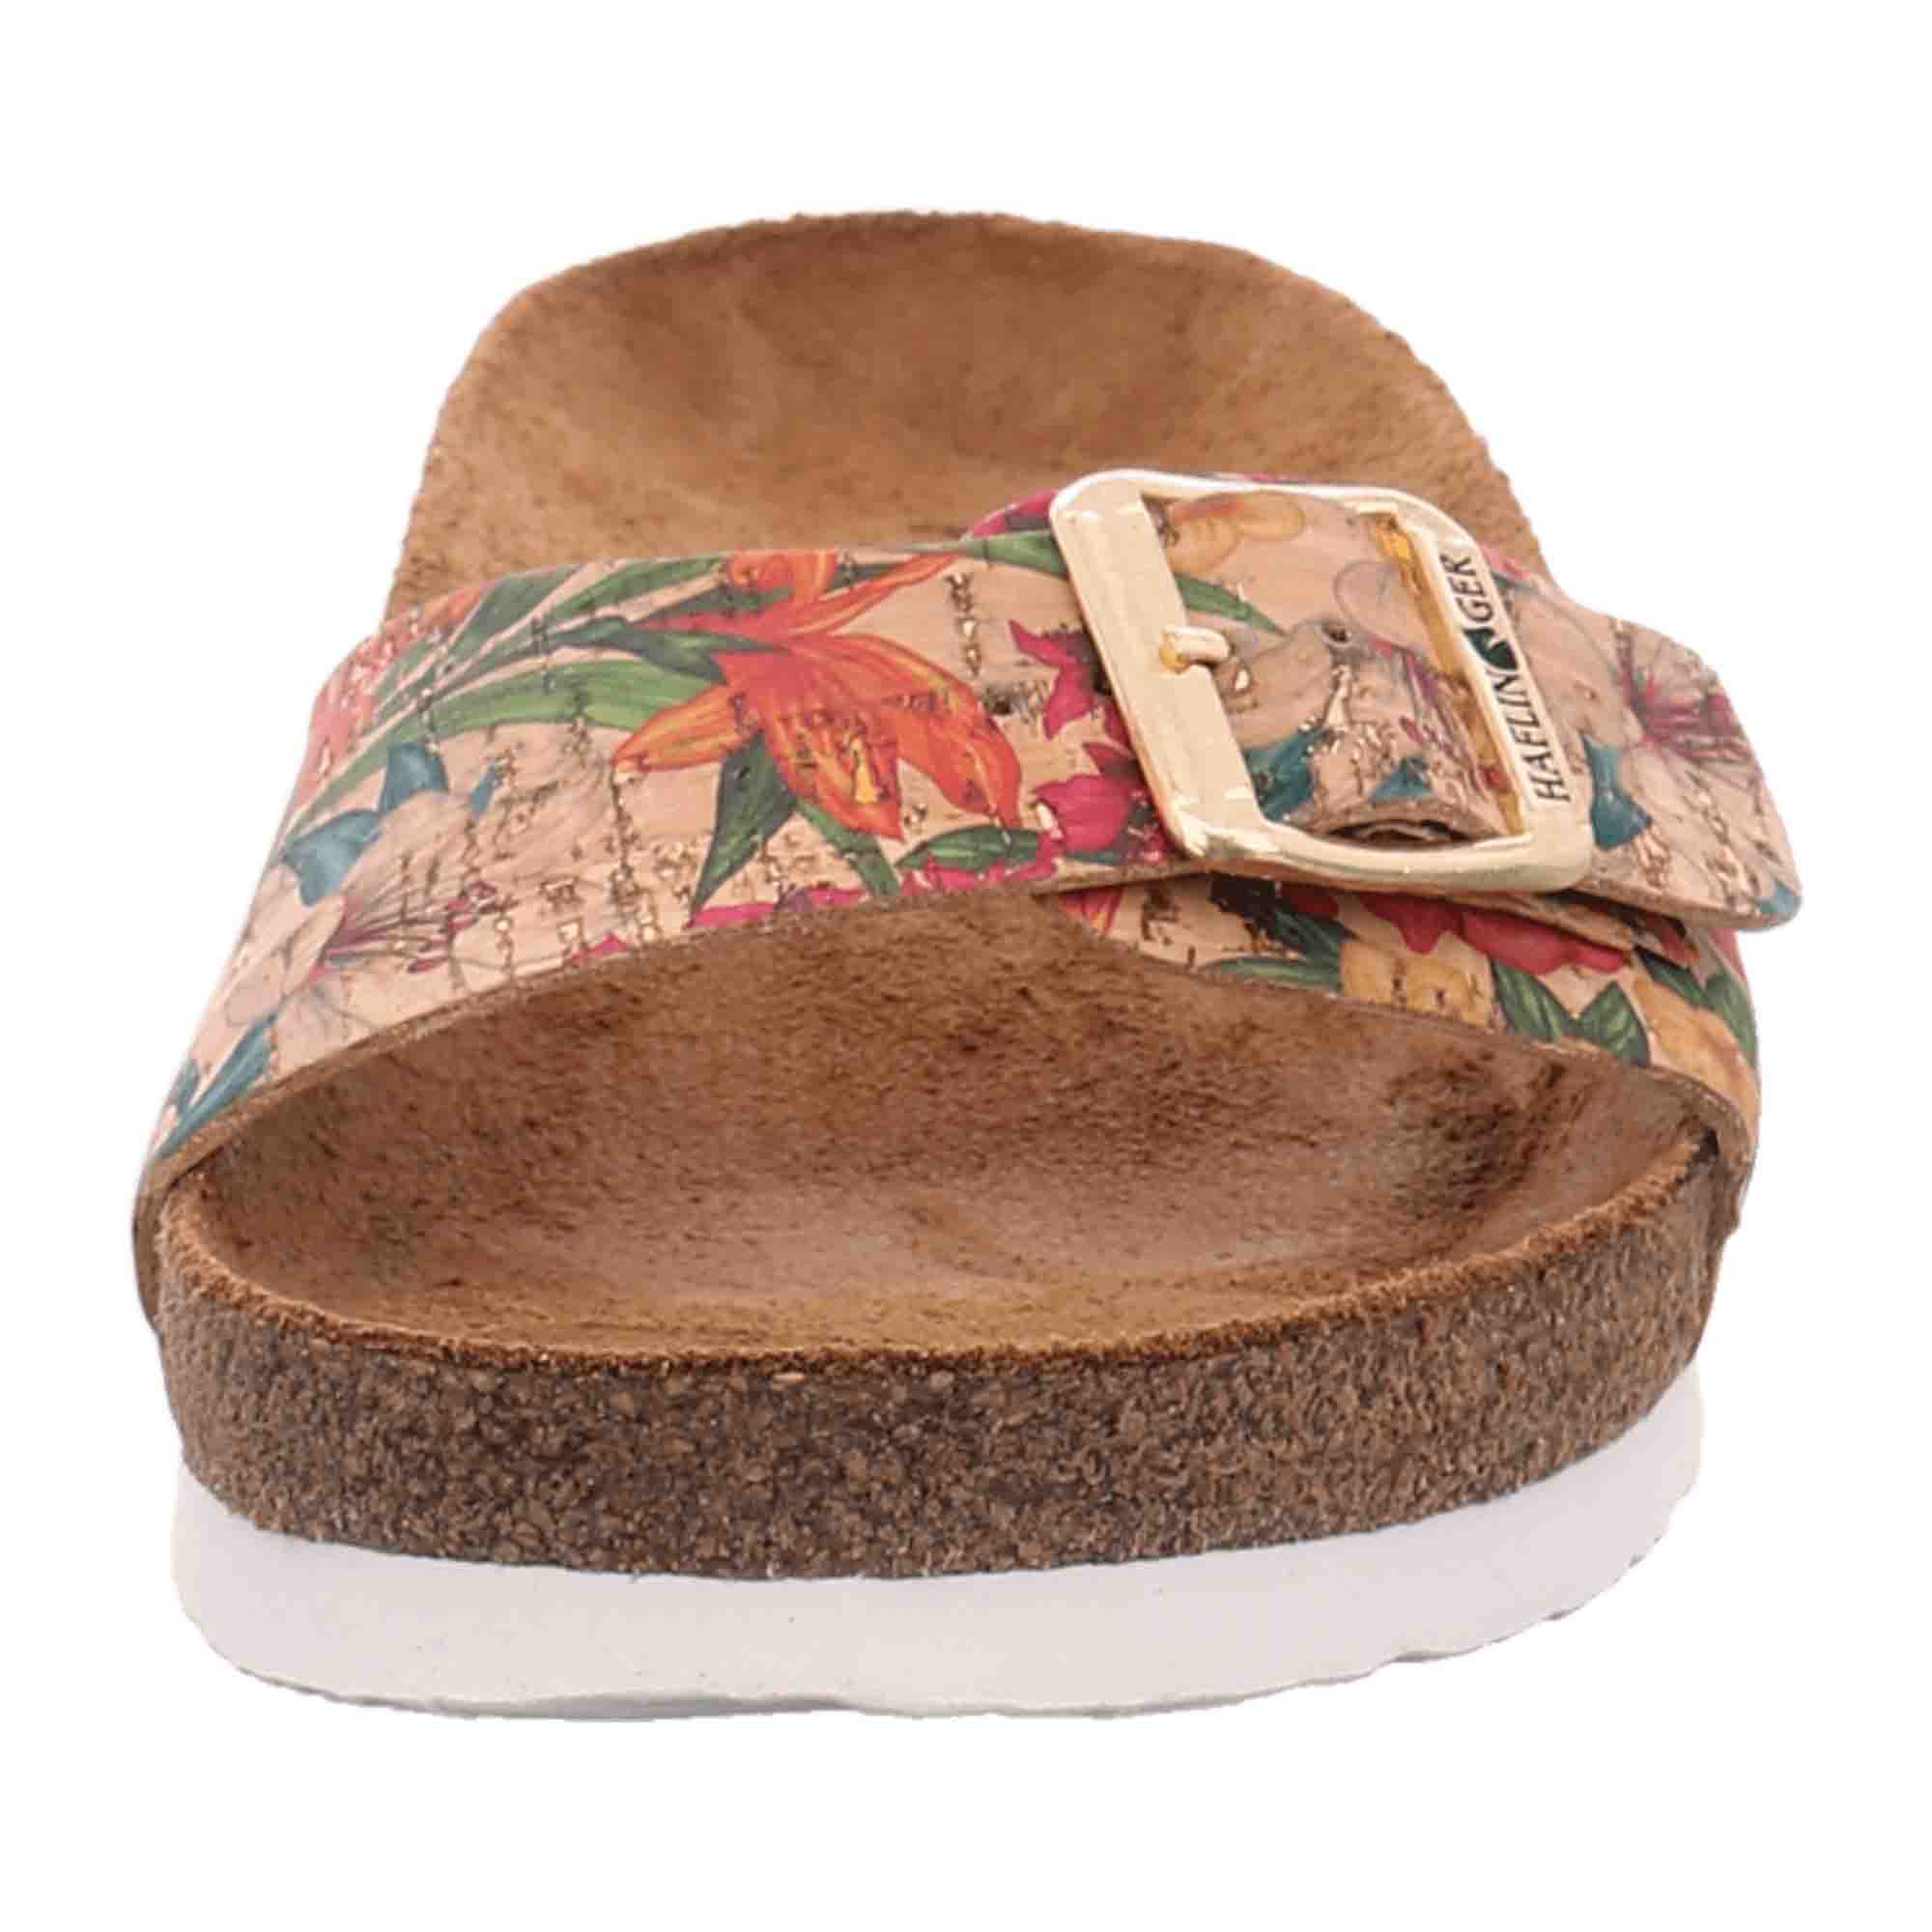 Haflinger Bio Gina Women's Sandals - Hibiscus Cork Multi, Size EU 37, Colorful